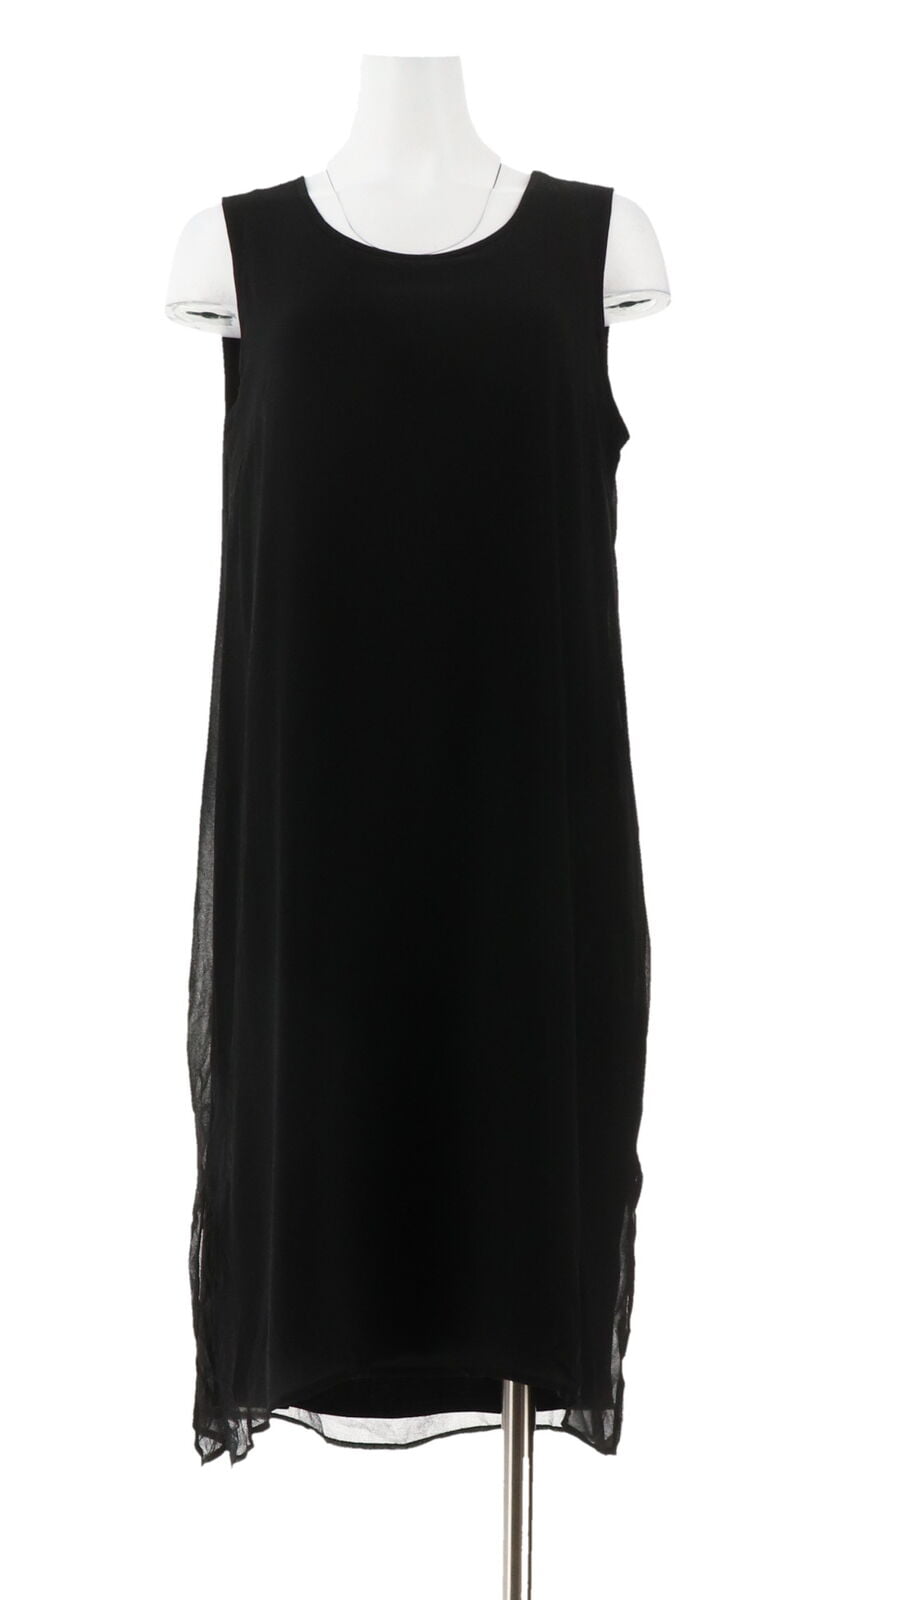 Joan Rivers Length Slvless Knit Dress Chiffon Overlay A304752 - Walmart.com